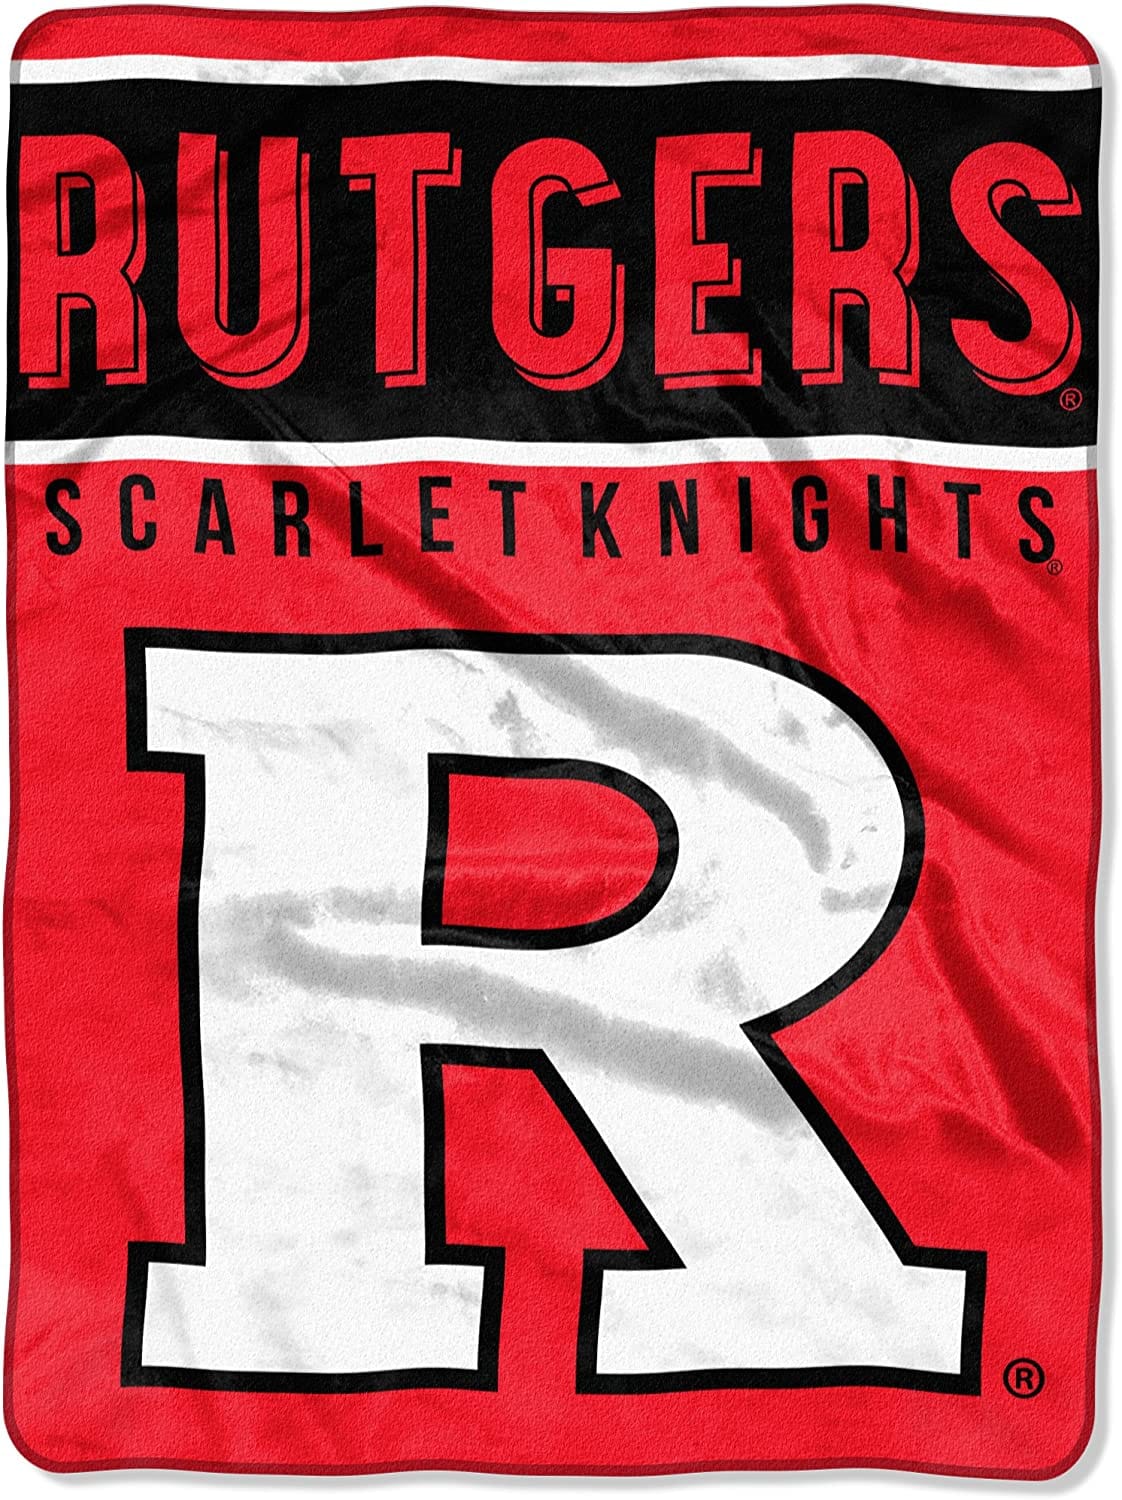 Ncaa Rutgers Scarlet Knights Fleece Blanket